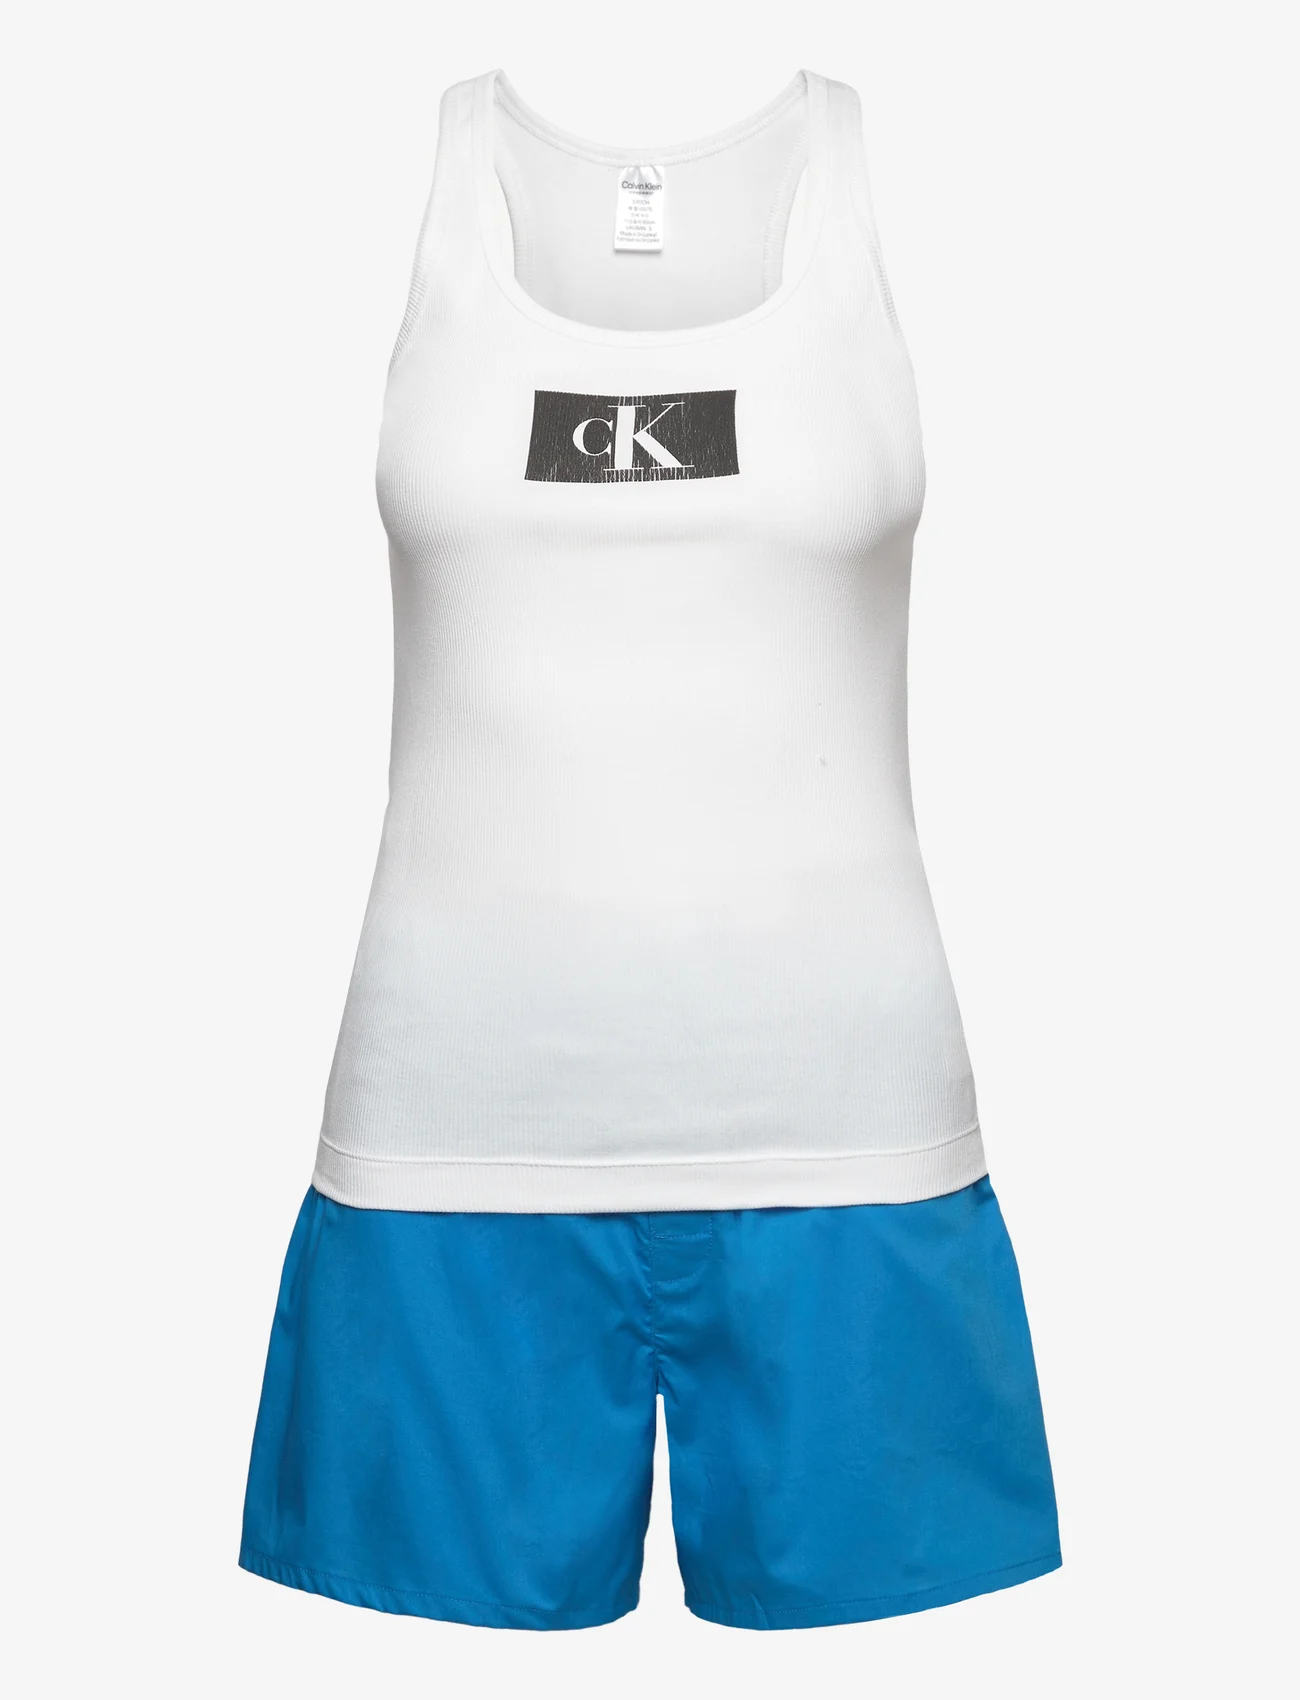 Calvin Klein - PJ IN A BAG - geburtstagsgeschenke - white top/brilliant blue bottom/bag - 0